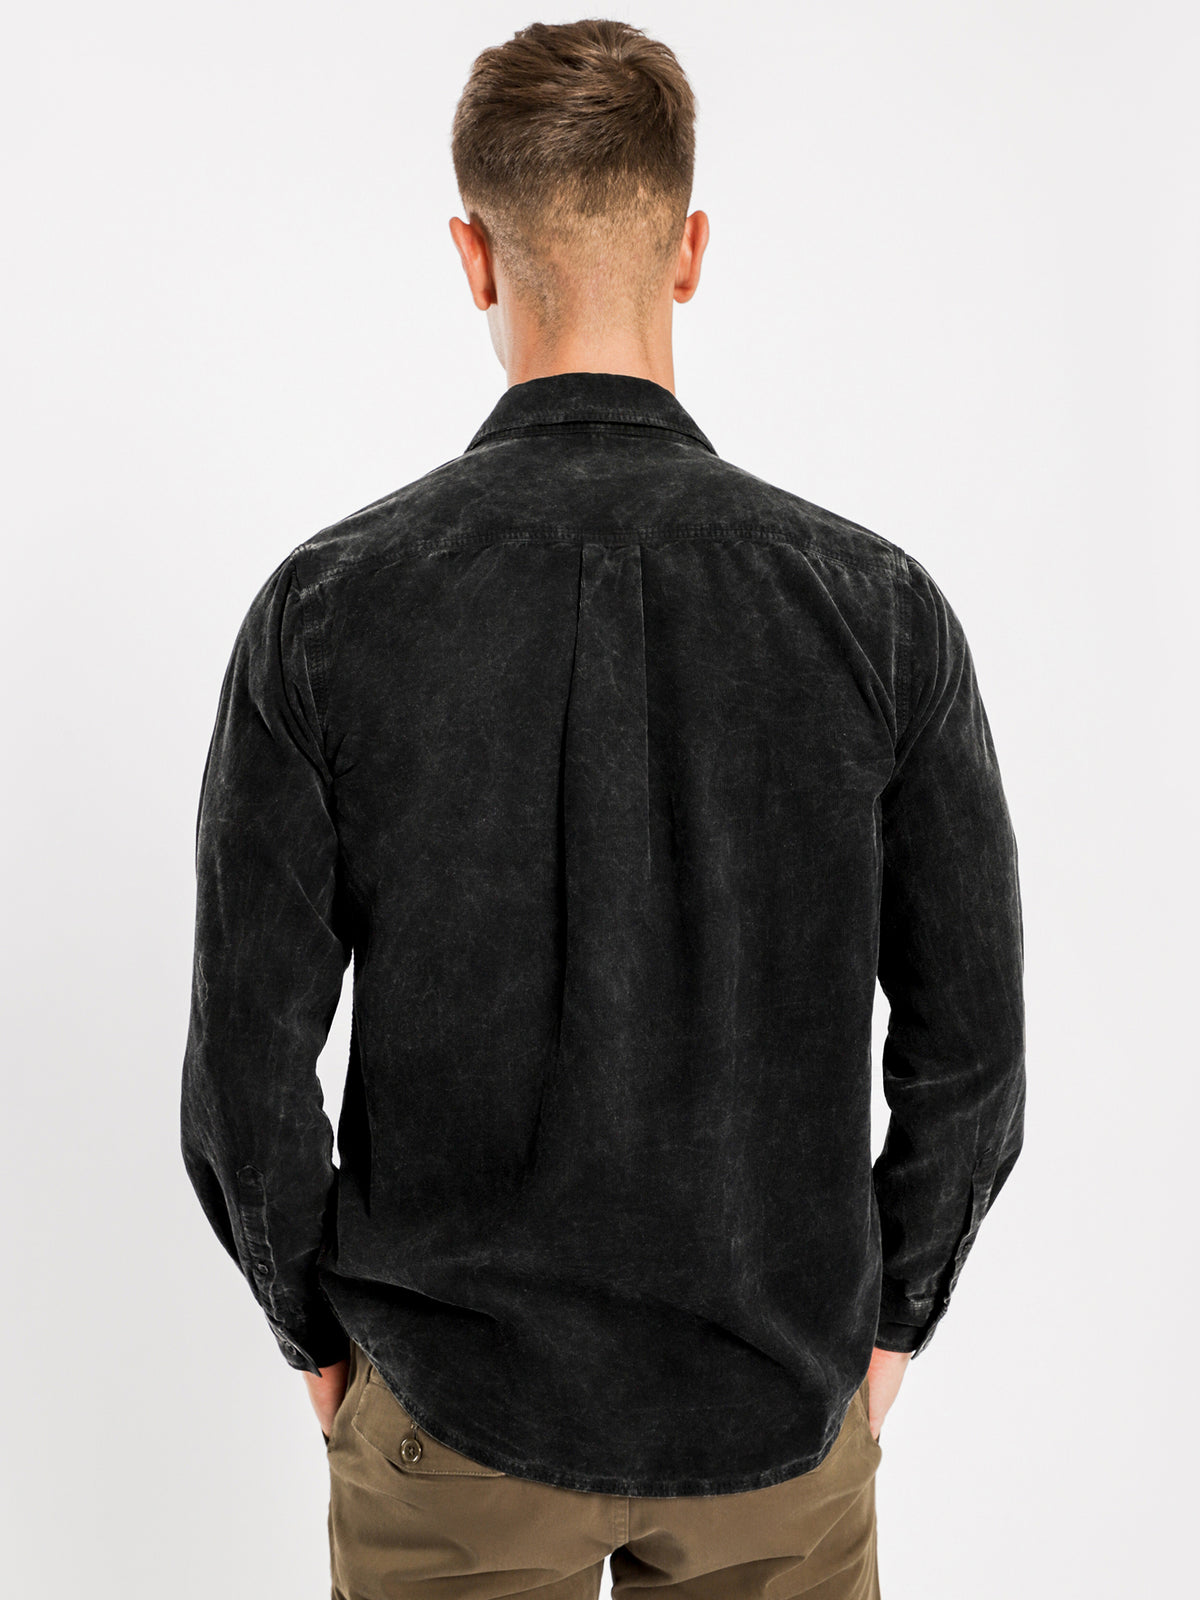 Cason Cord Long Sleeve Shirt in Acid Black